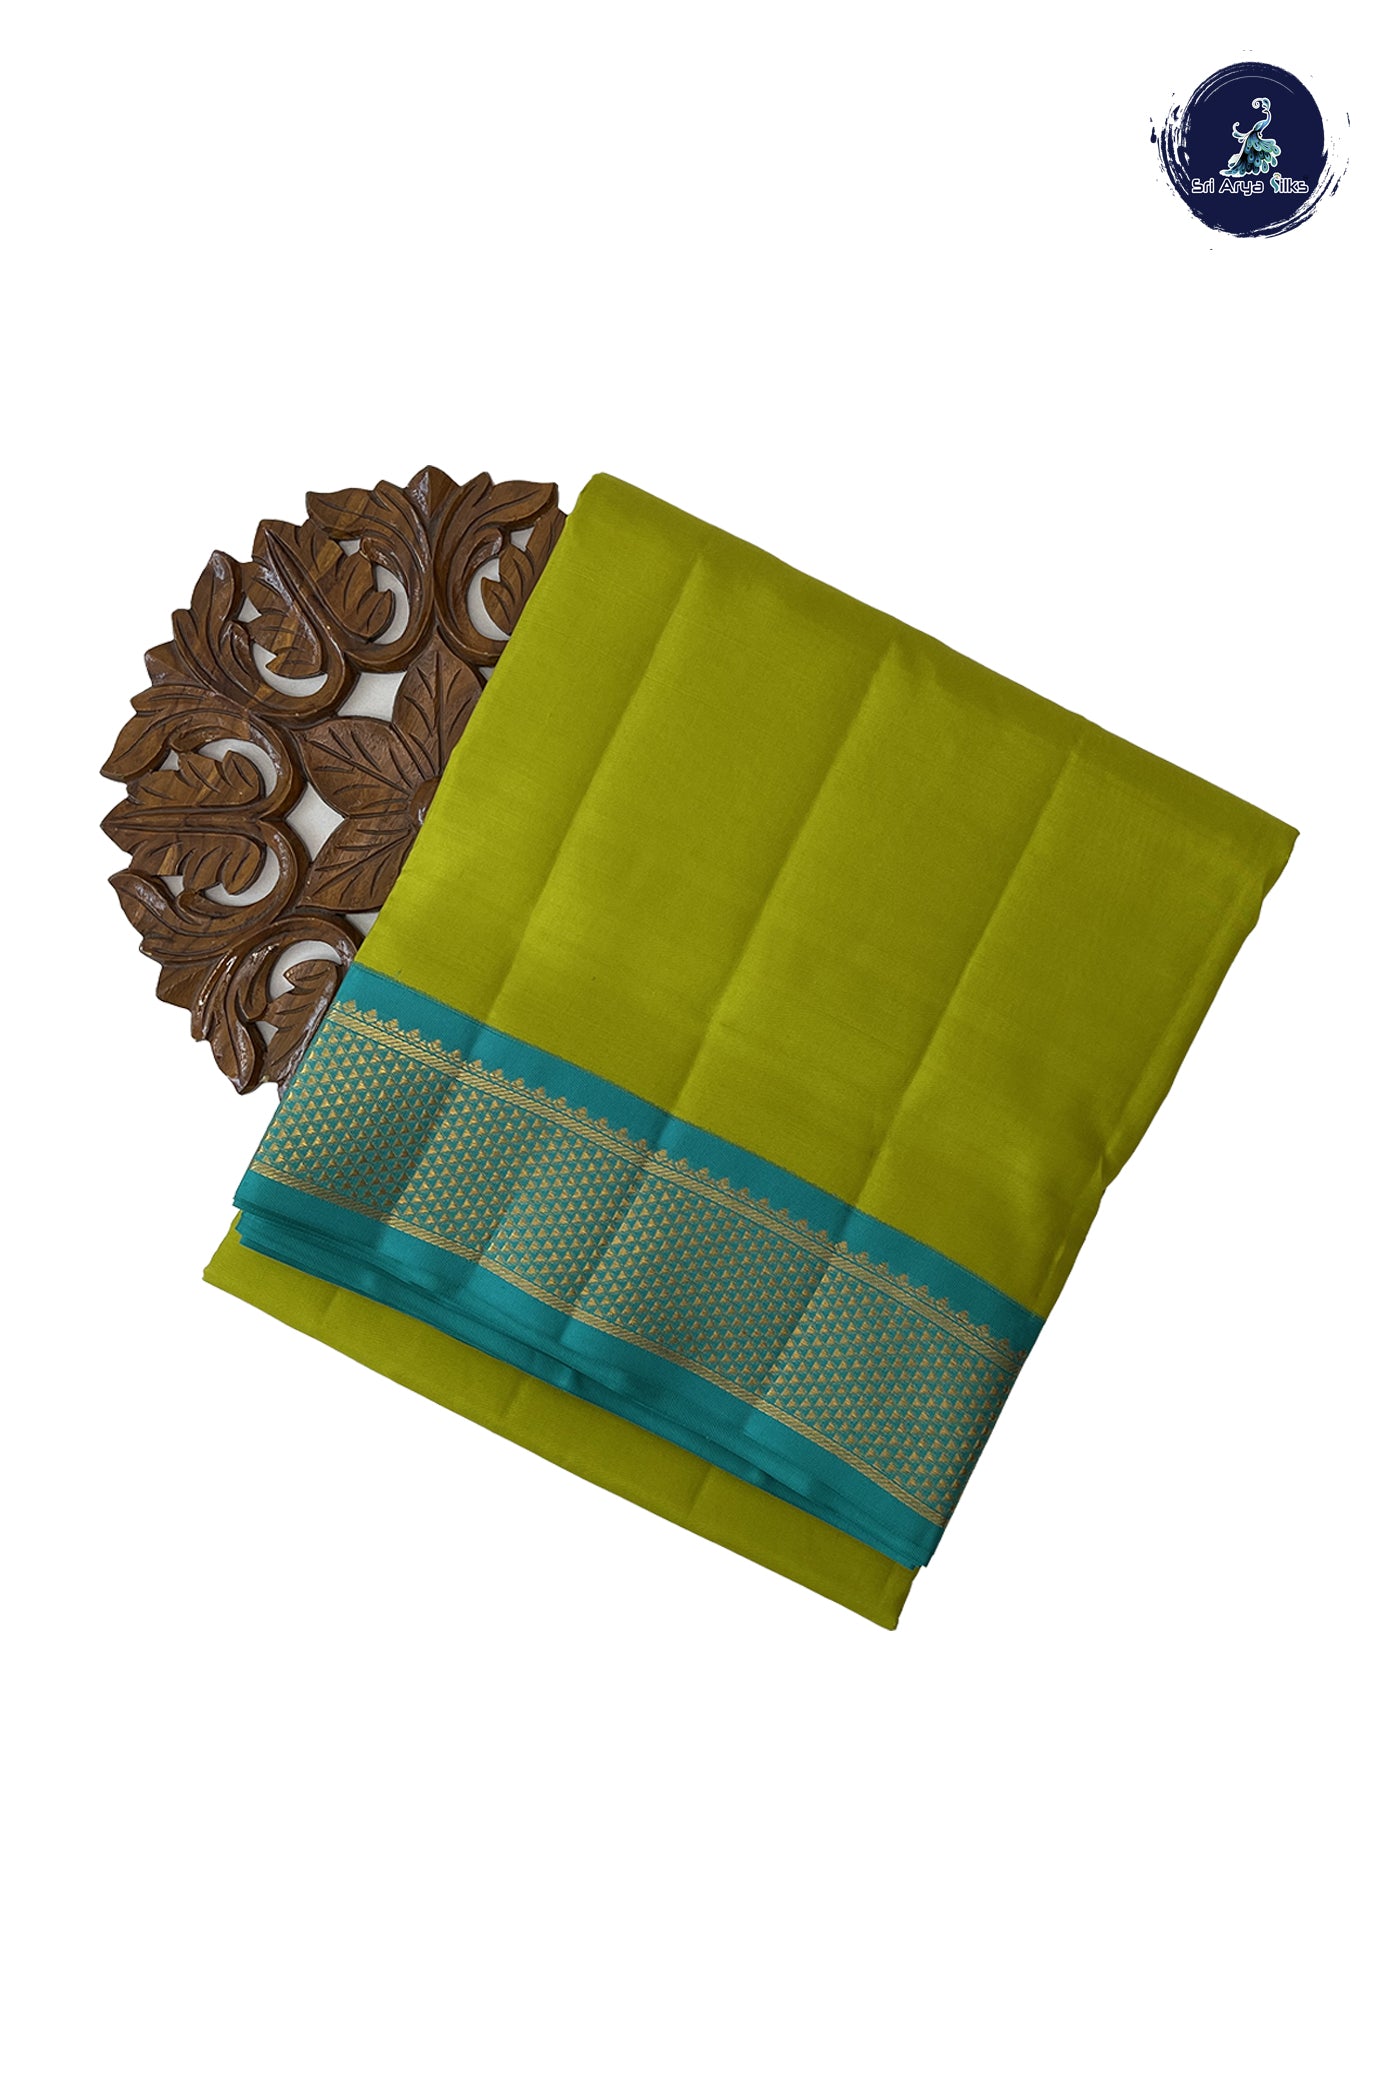 Paasiparupu Green Madisar 10 Yards Silk Saree With Plain Pattern